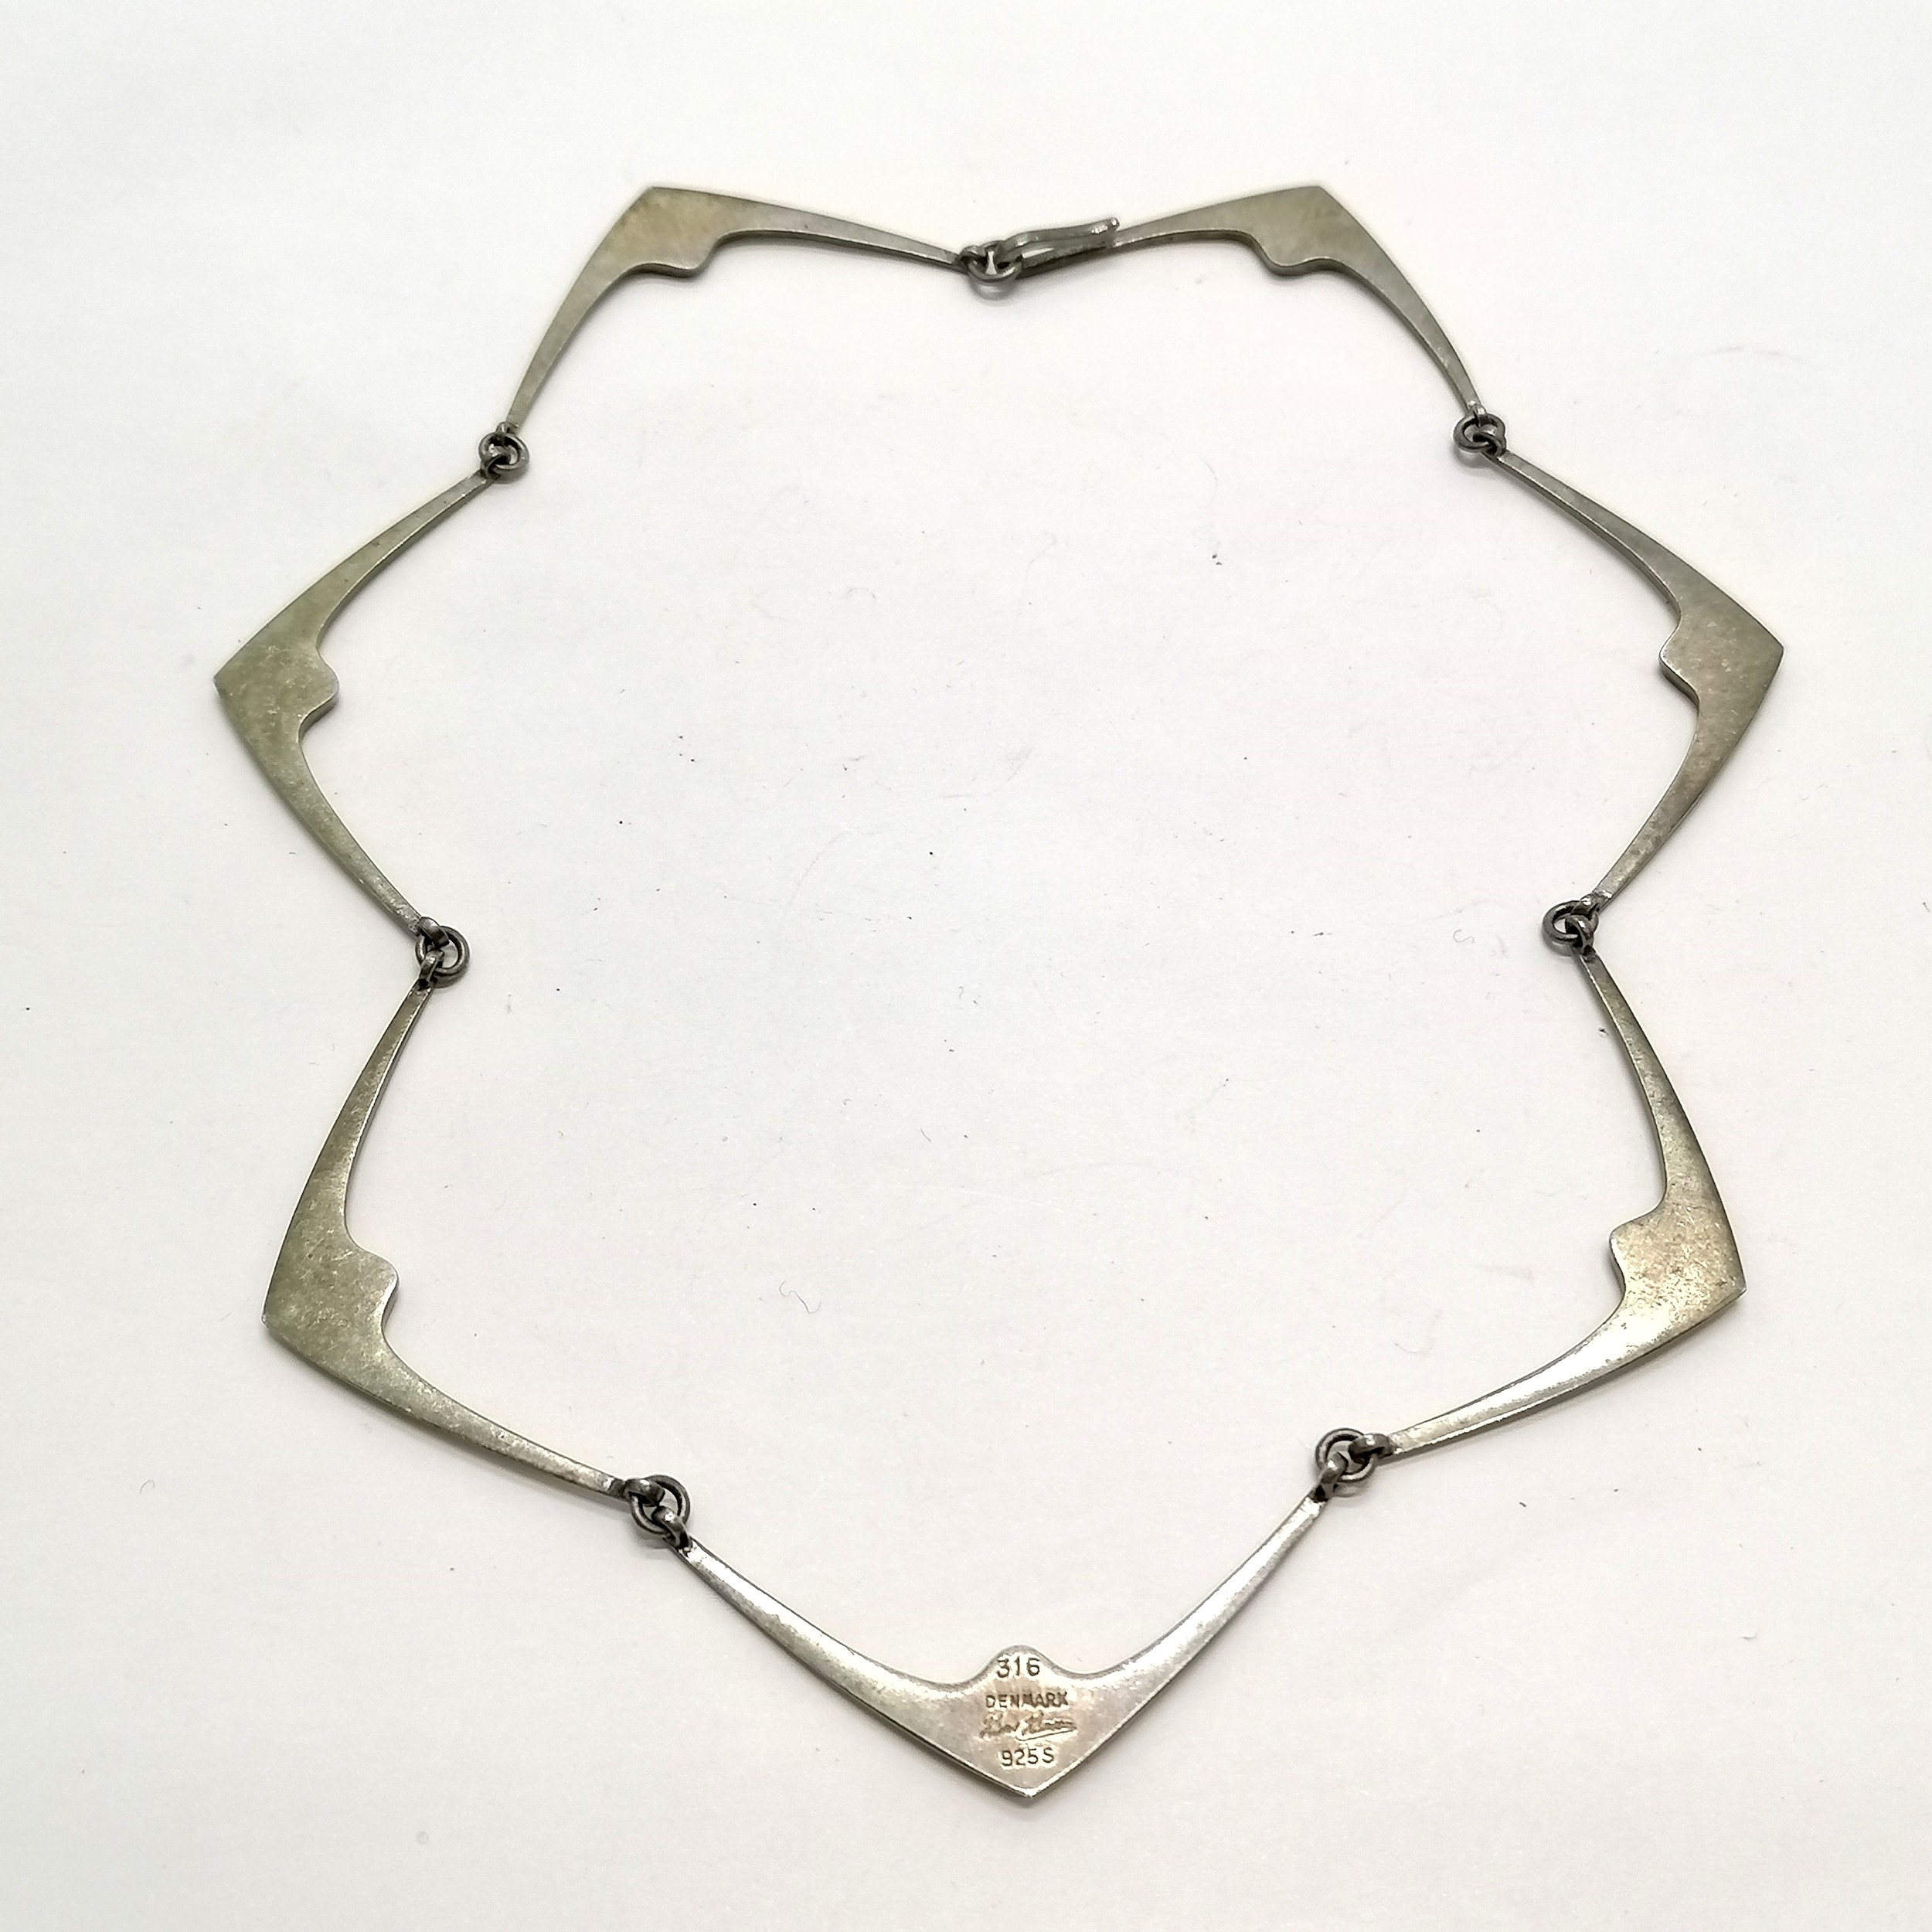 Hans Hansen #316 Danish silver necklace - 26g - Image 2 of 3